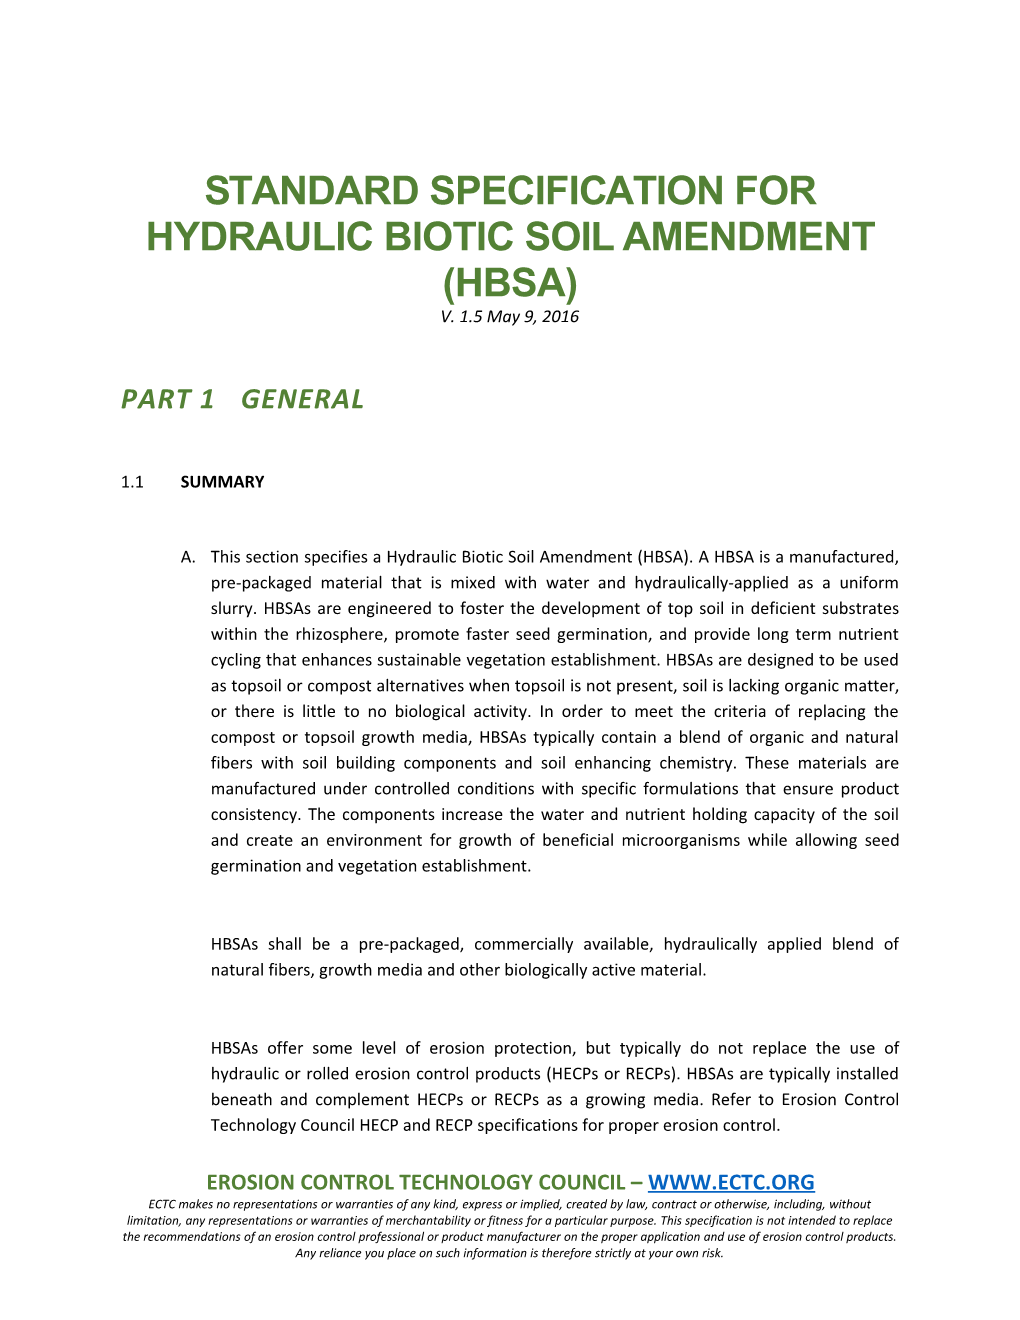 Standard Specification for Hydraulic Biotic Soil Amendment (Hbsa)